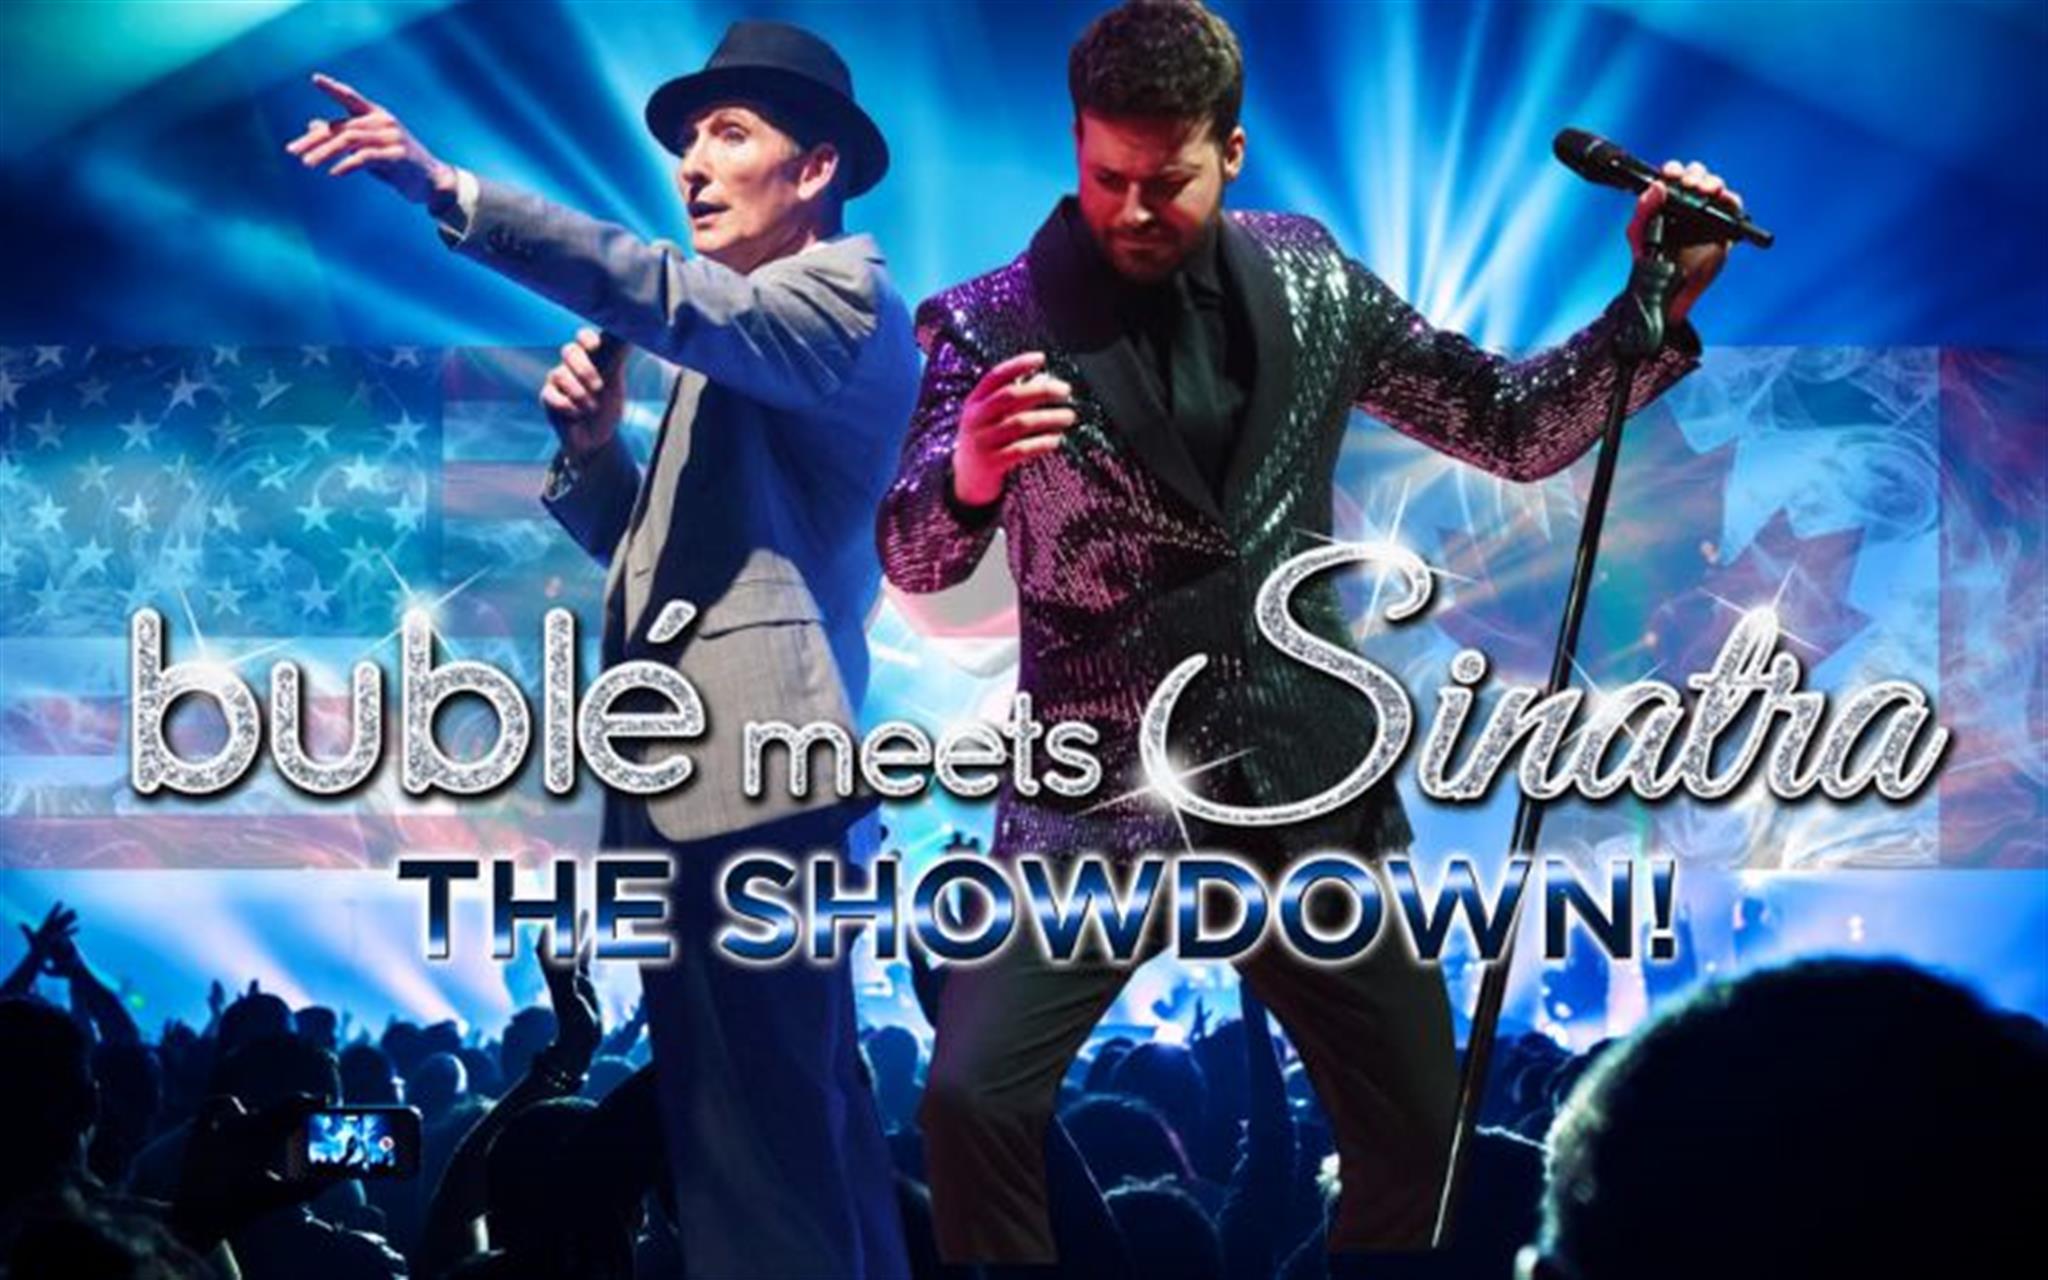 Bublé meets Sinatra: The Showdown!